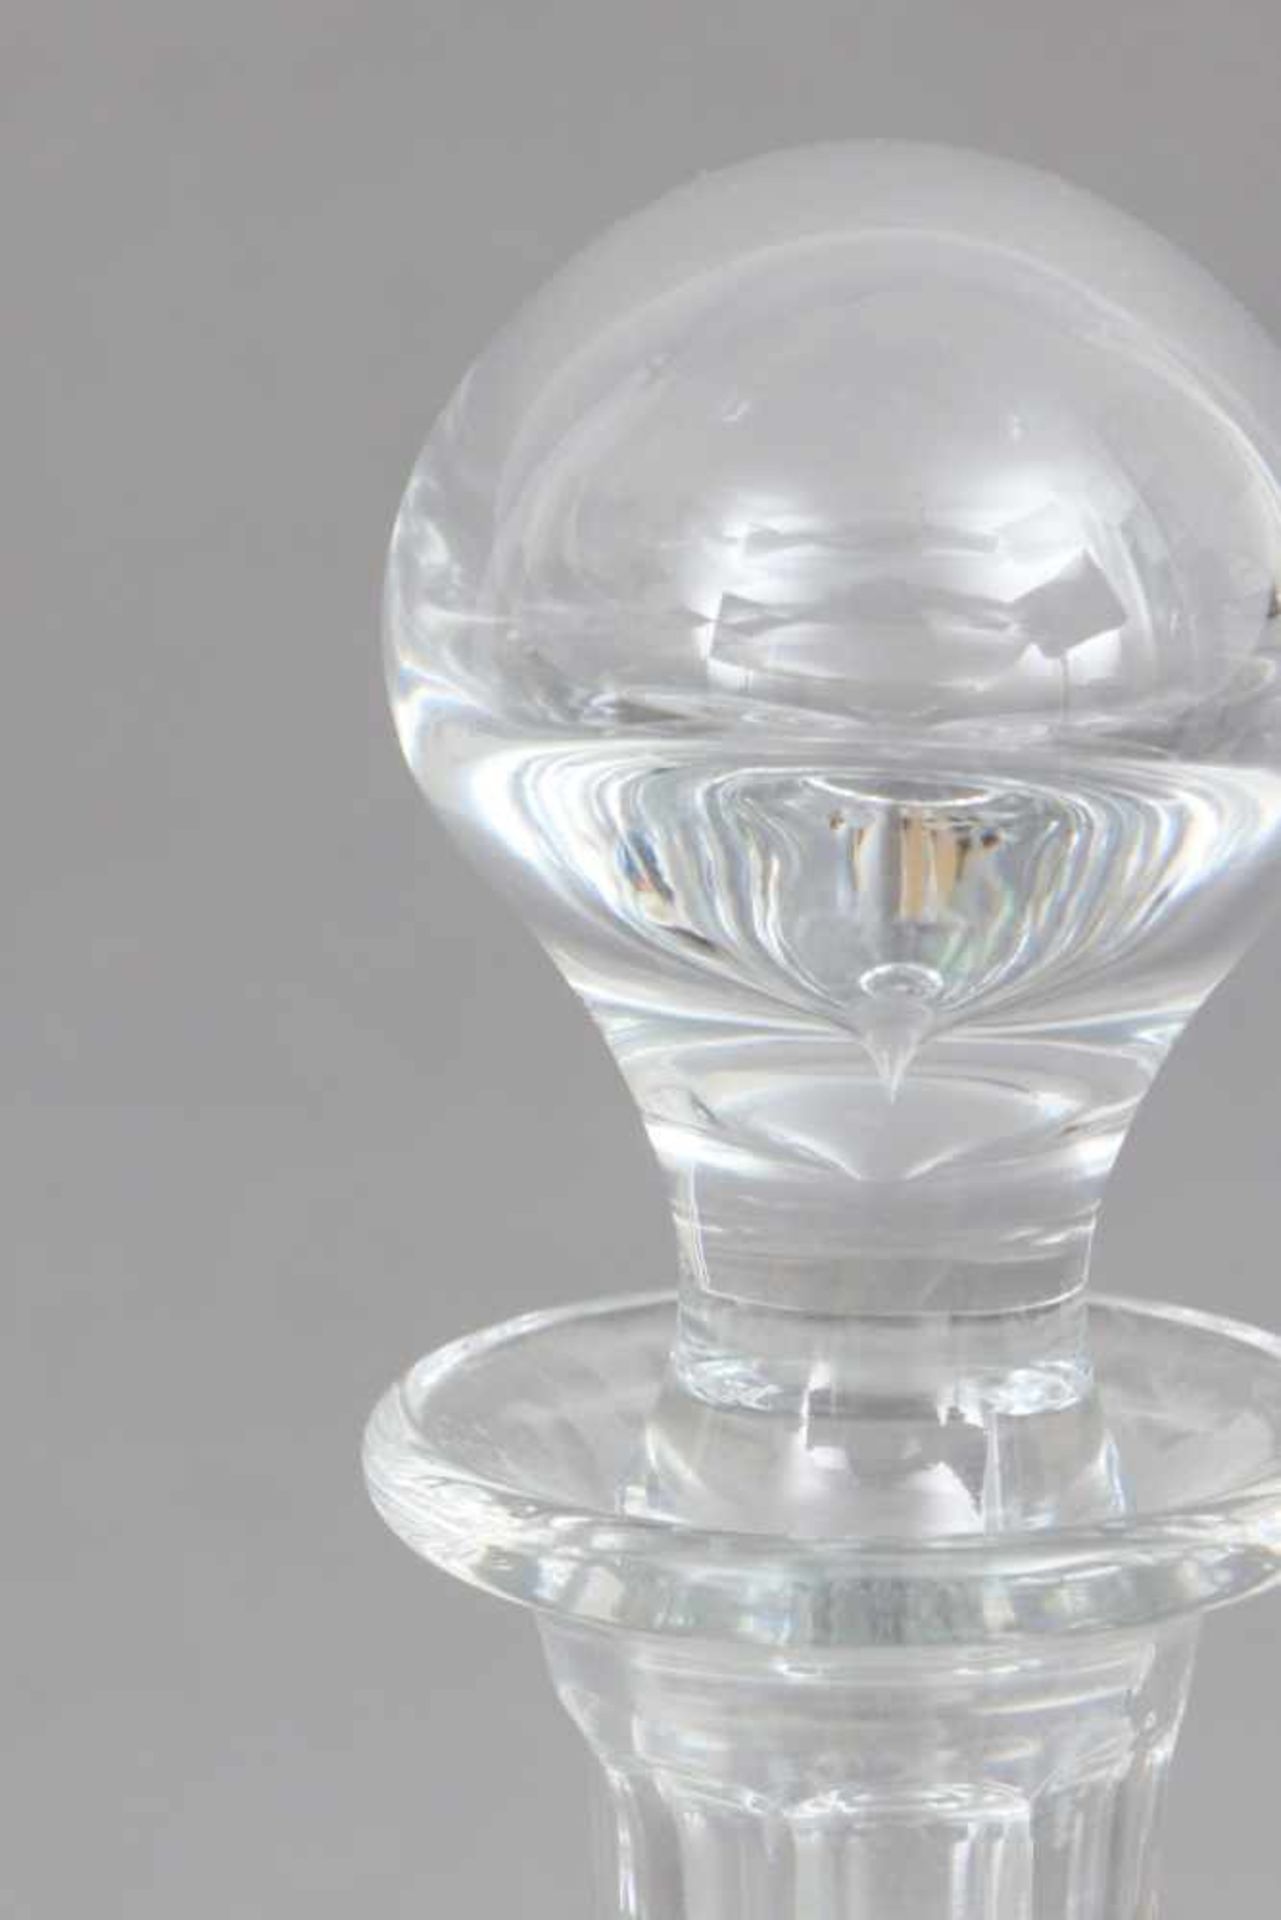 BACCARAT Kristallkaraffe farbloses Glas, tropfenförmiger Korpus, facettiert/geschliffen, schlanker - Bild 2 aus 2